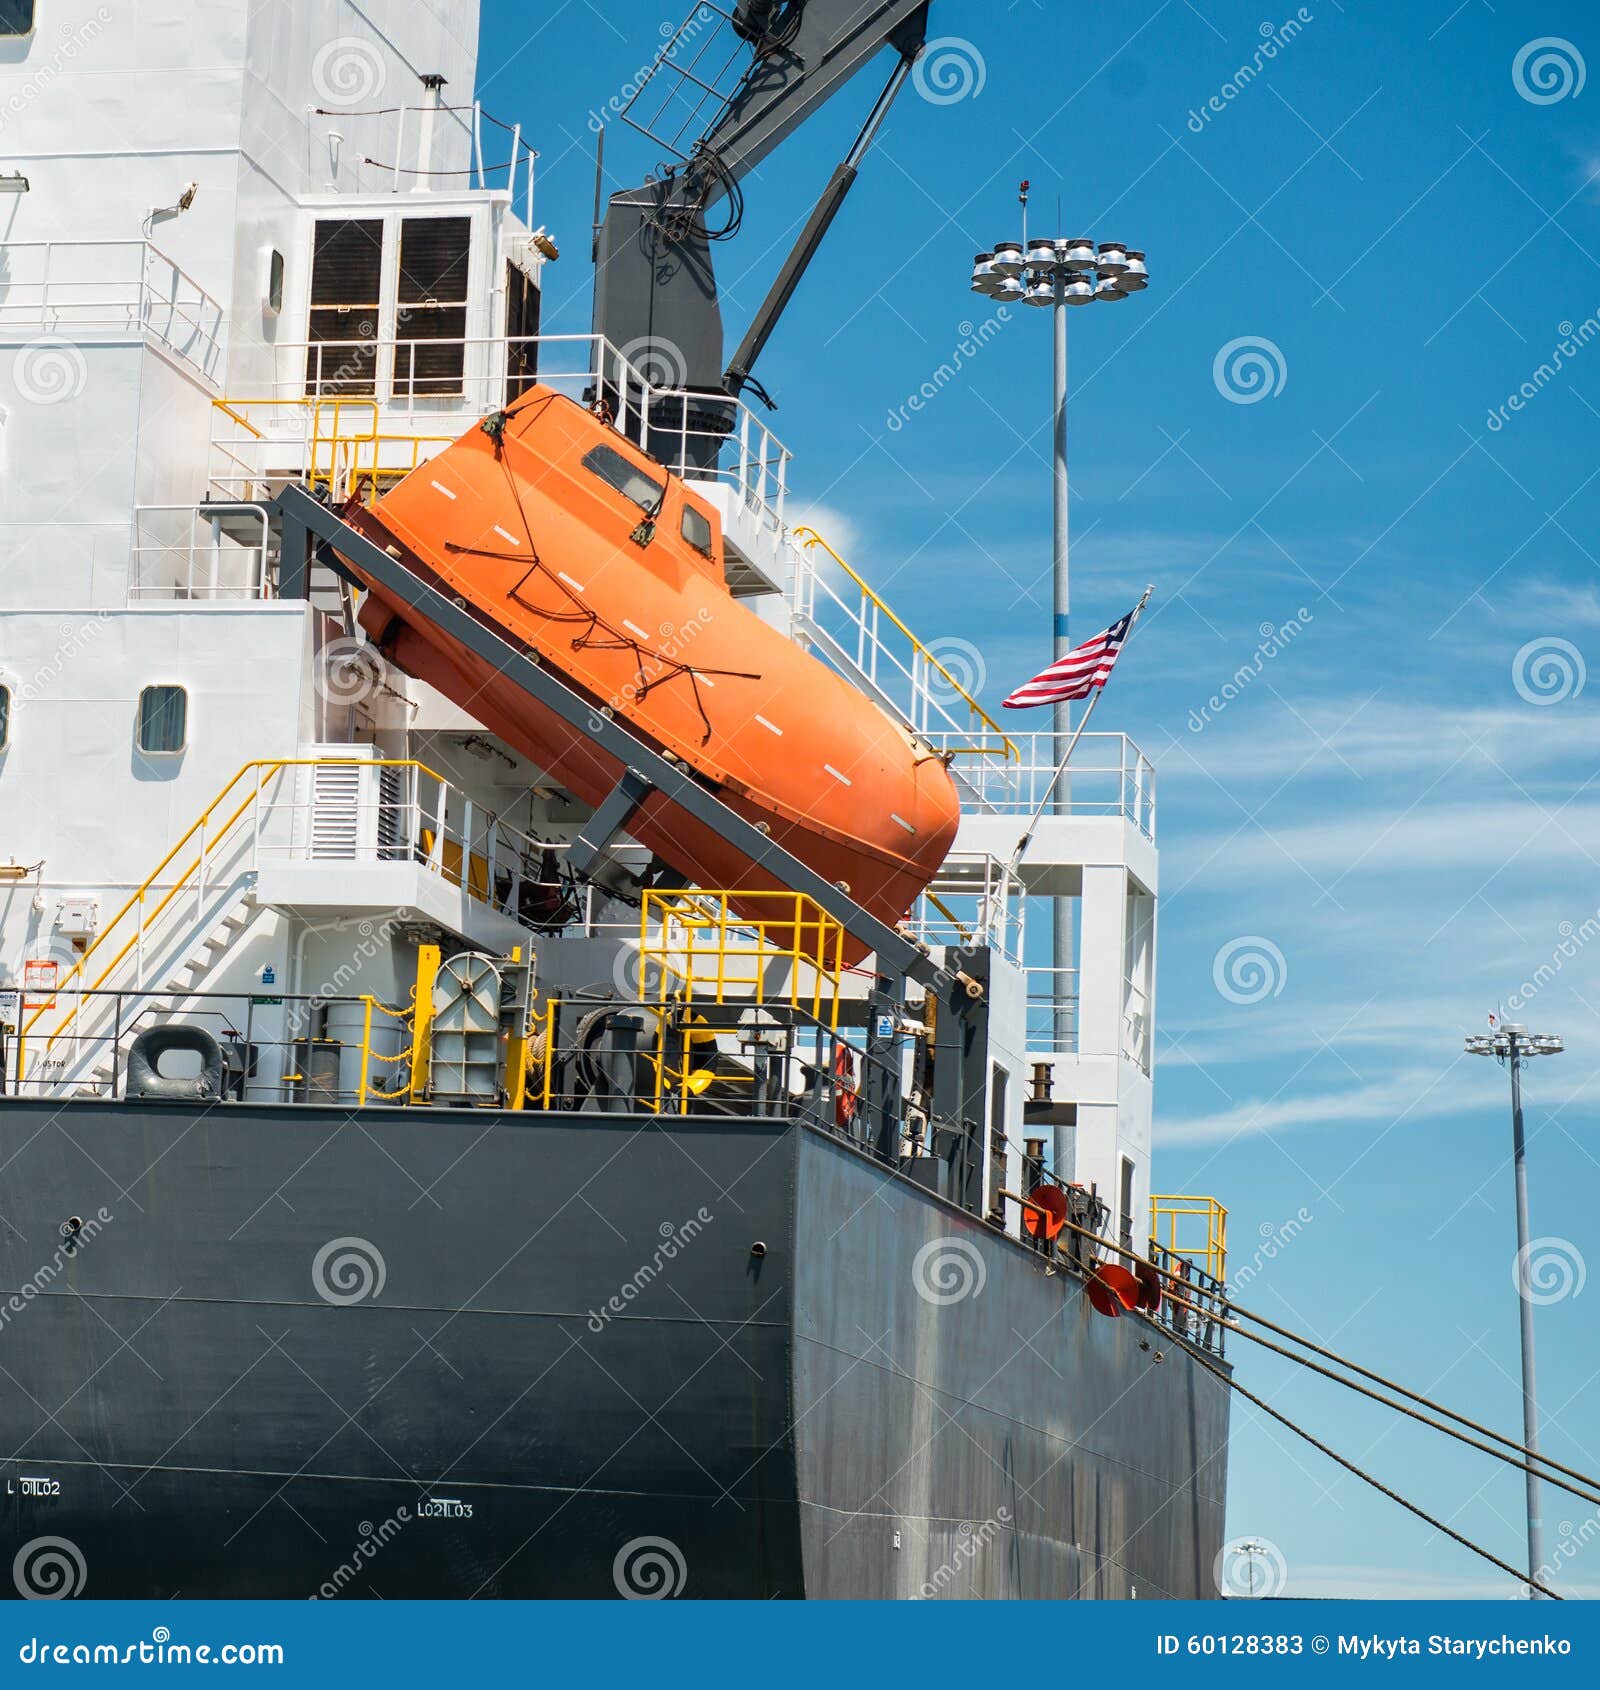 Orange free-fall life boat for emergency crew evacuation installed on 